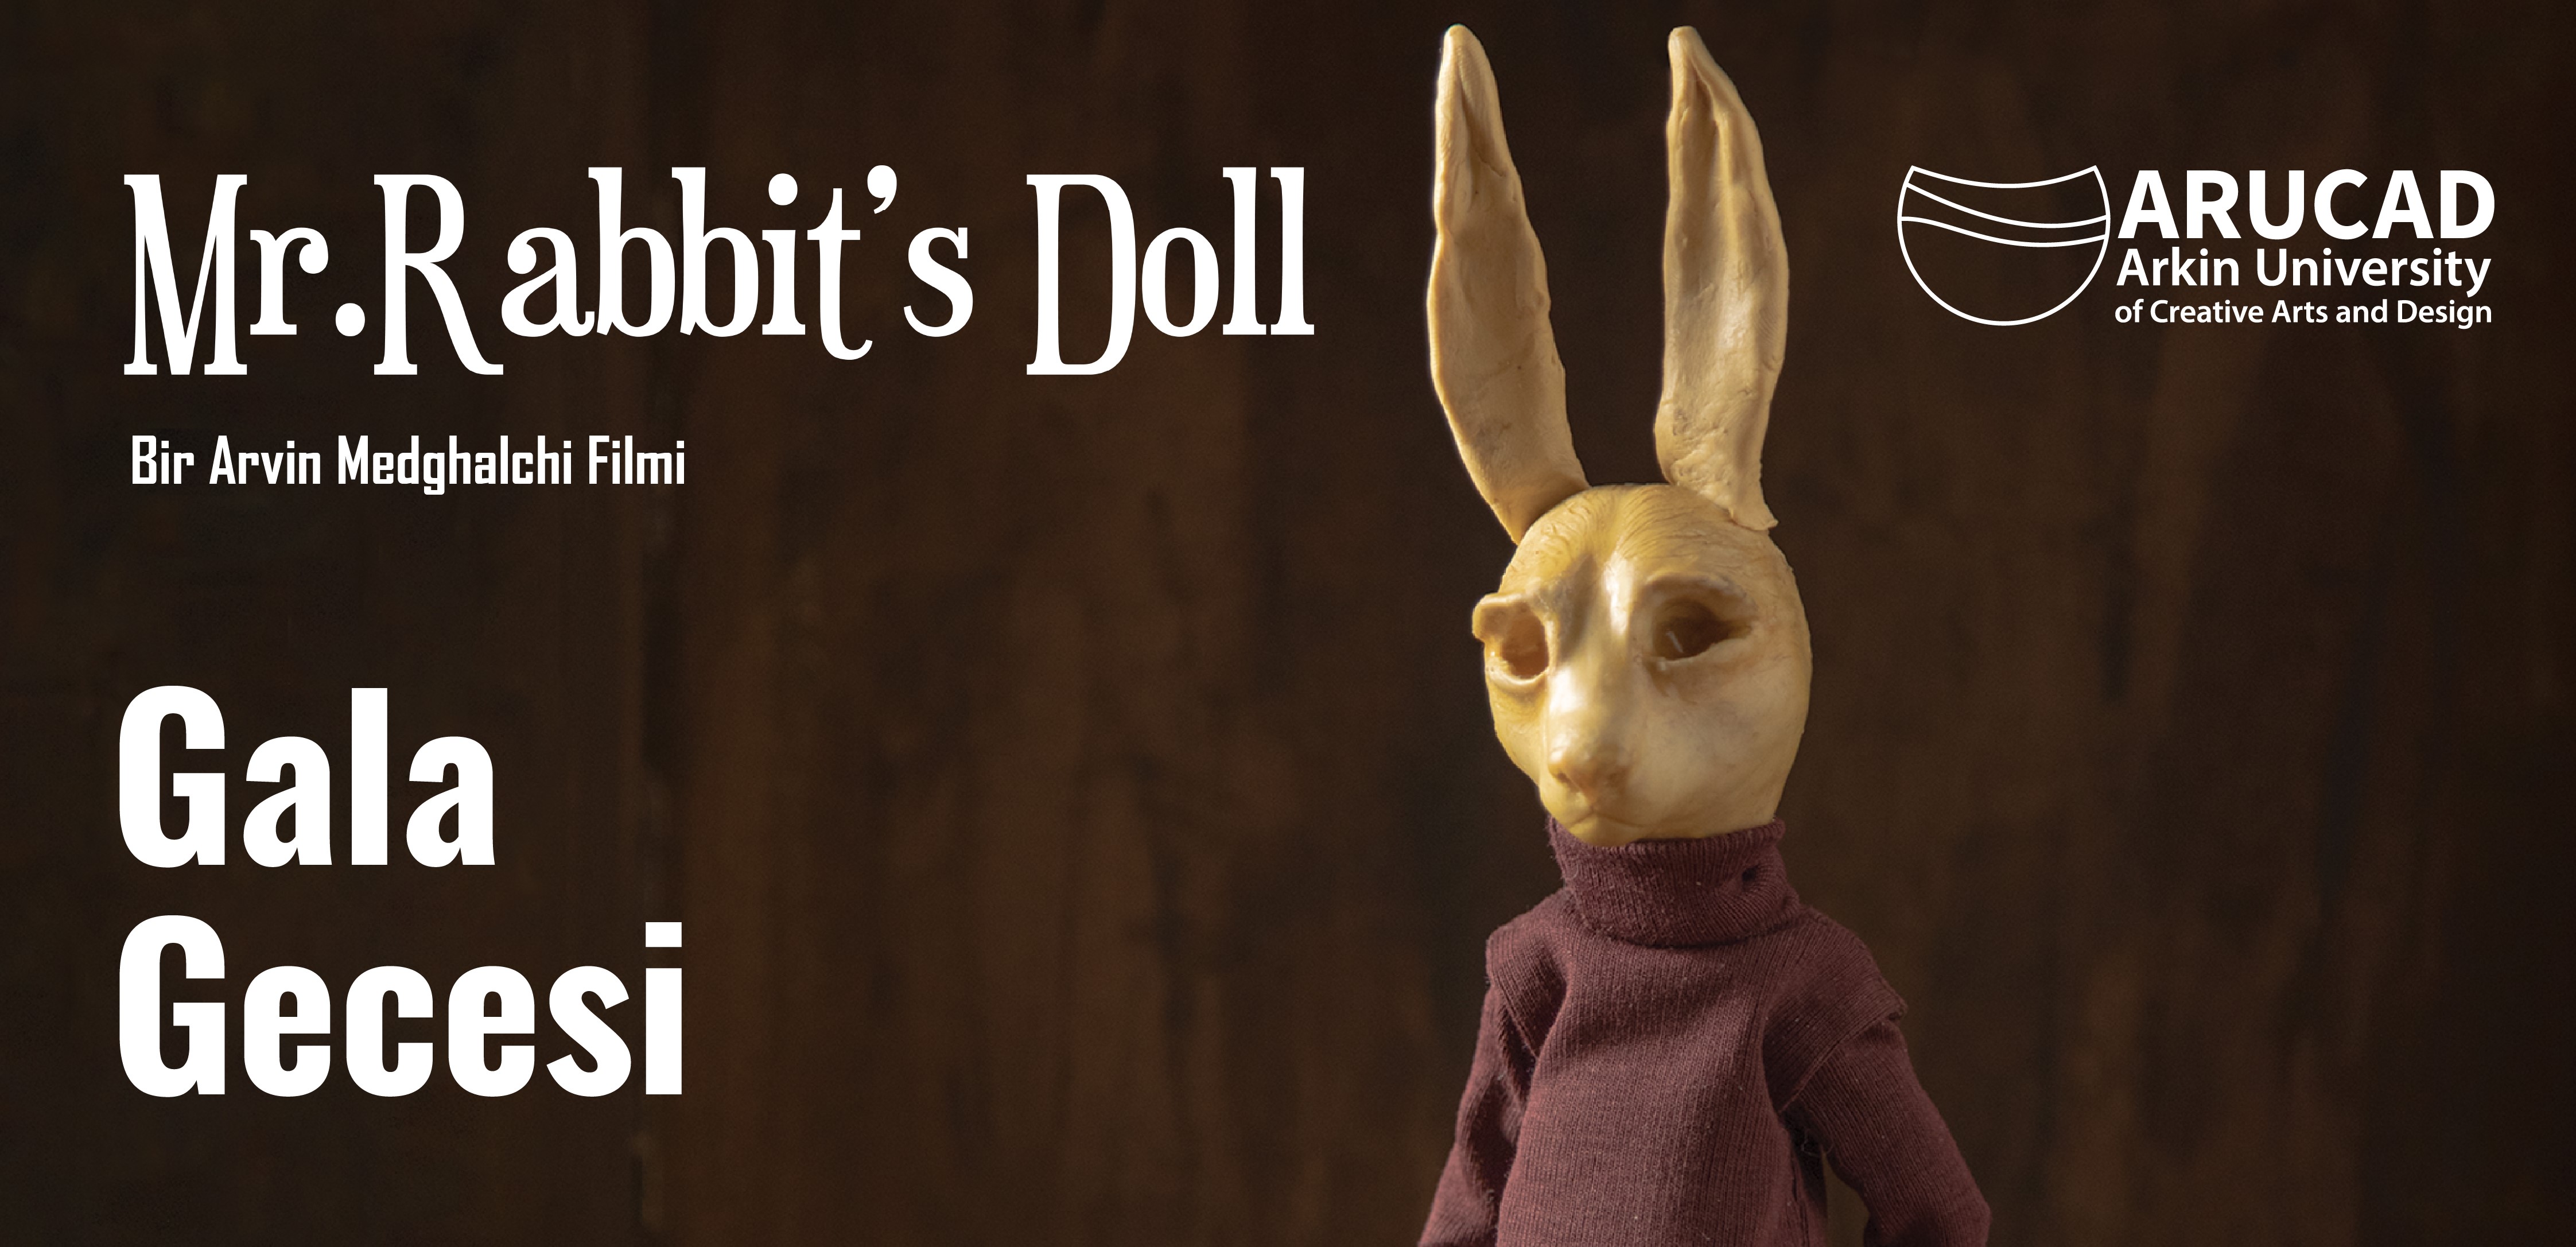 Mr. Rabbit’s Doll Filmine  ARUCAD’da Gala Gecesi